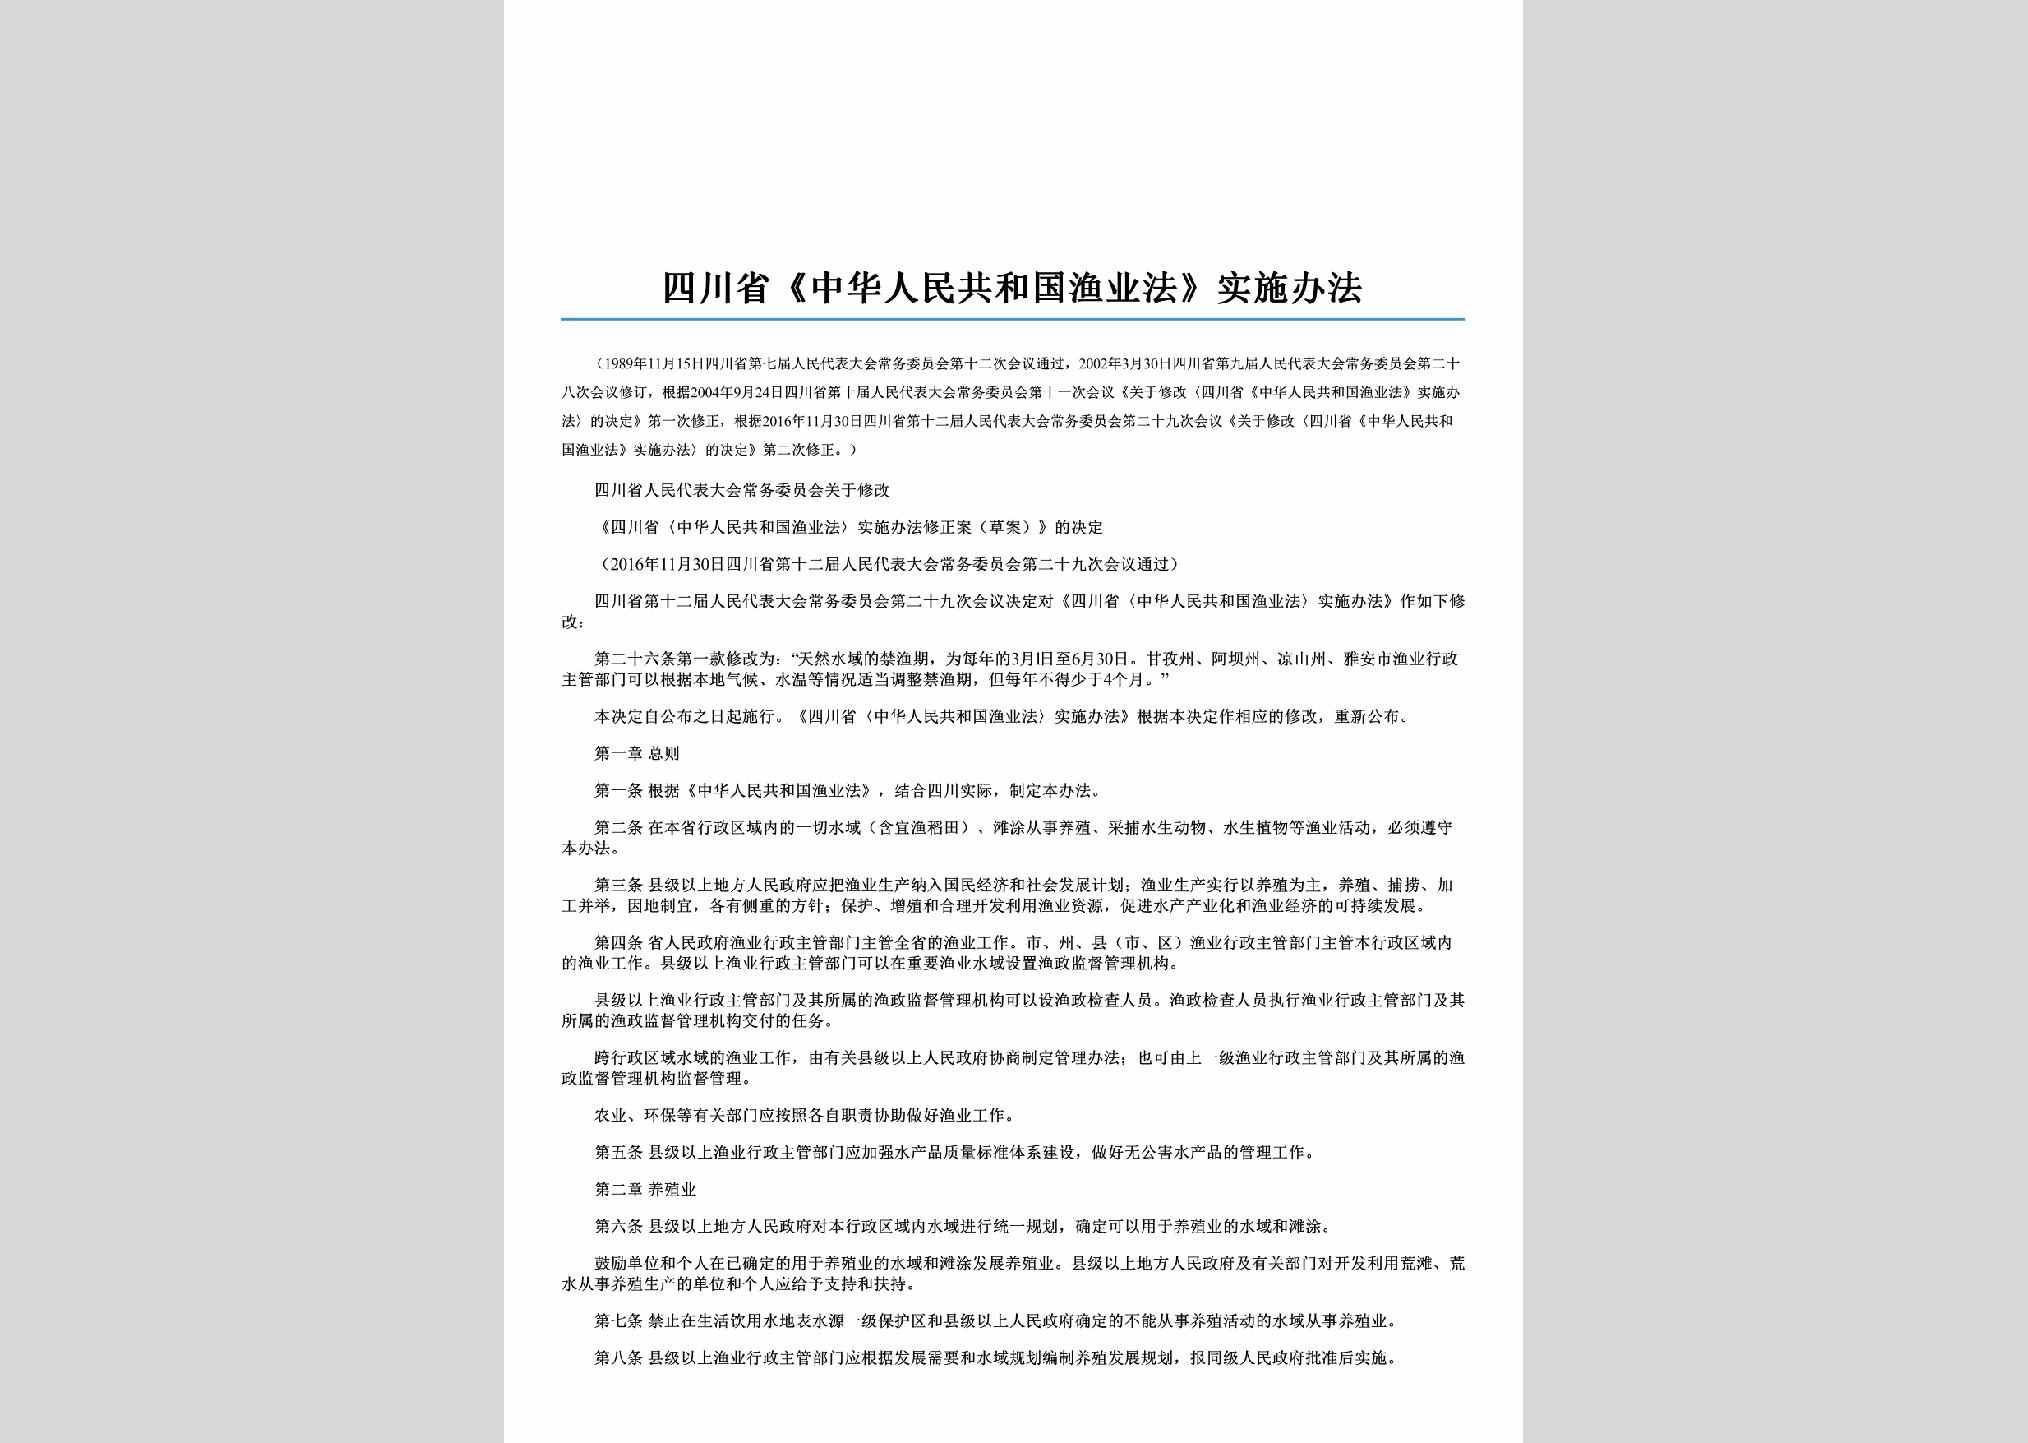 SC-YYFSSBF-2002：四川省《中华人民共和国渔业法》实施办法